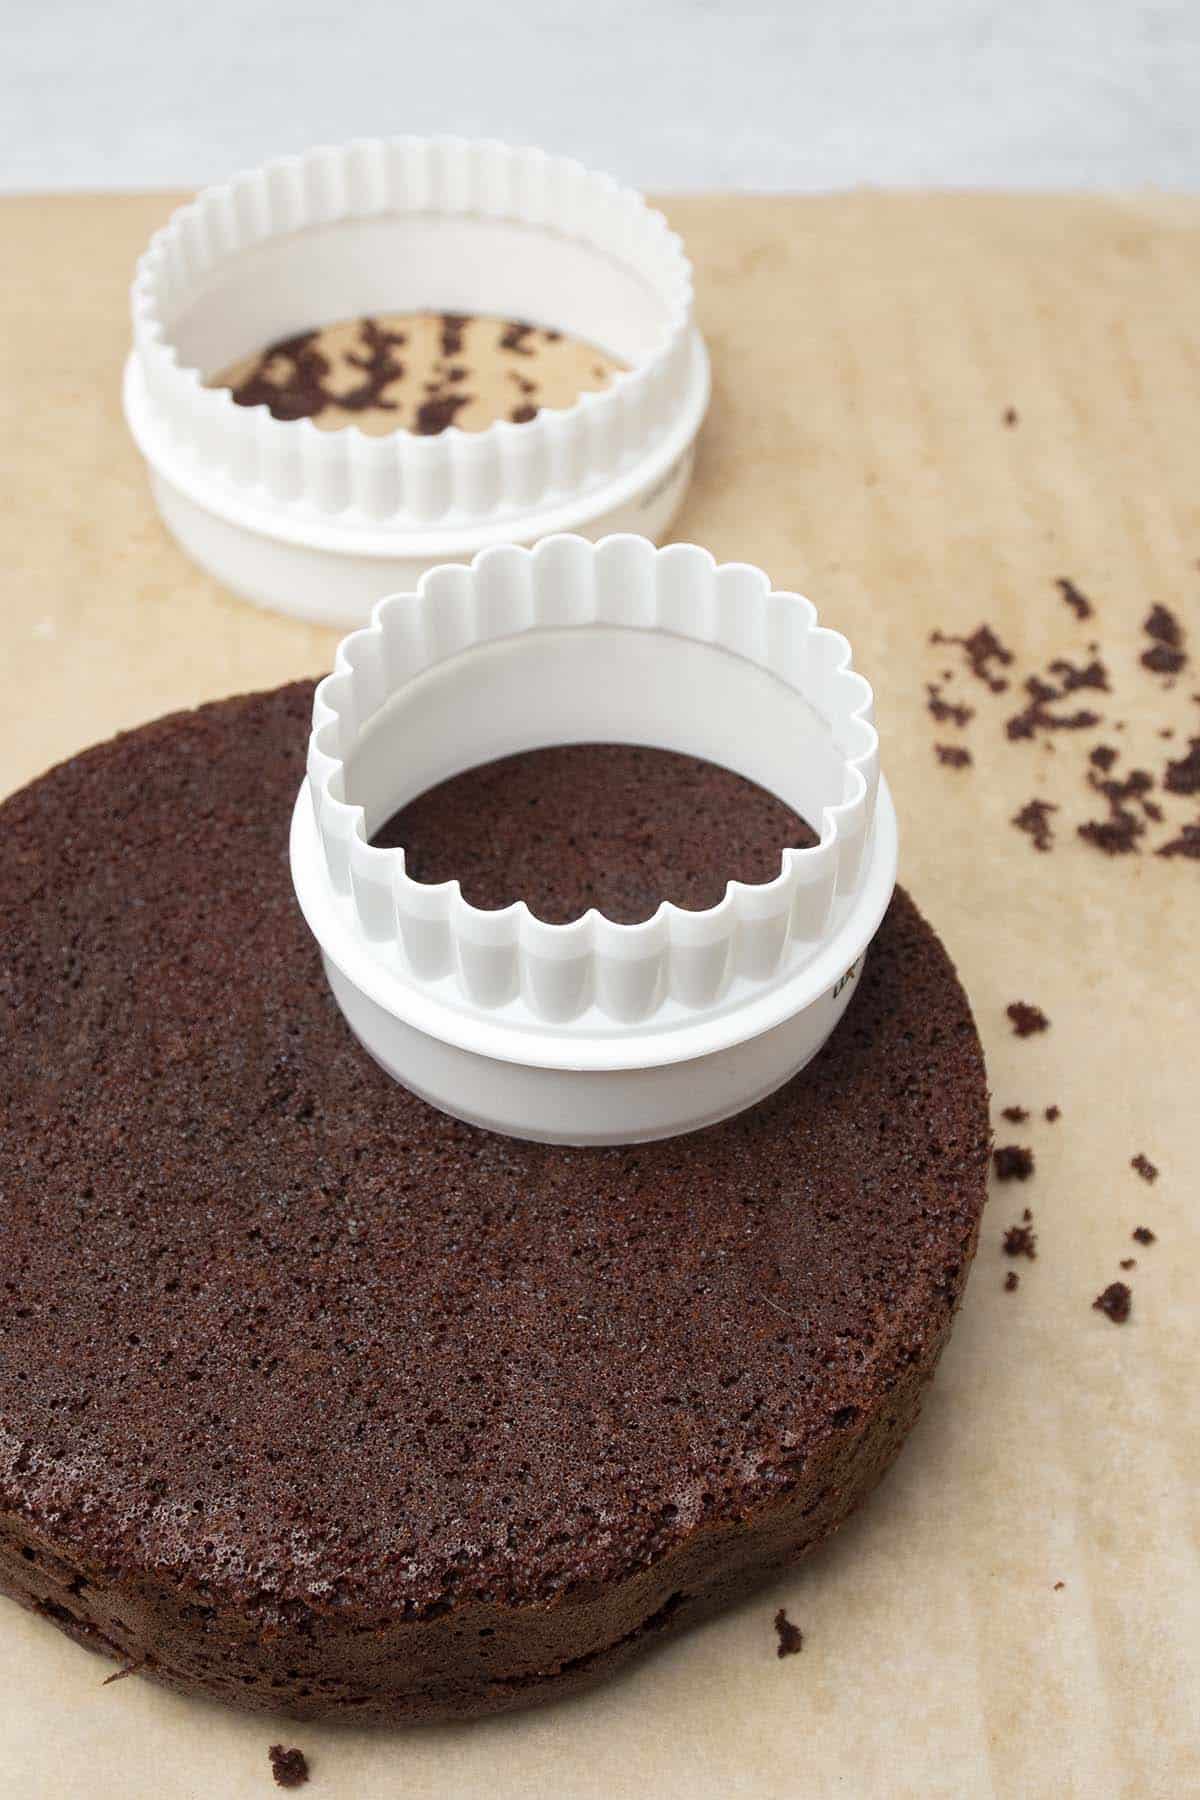 Cutting chocolate sponge layers